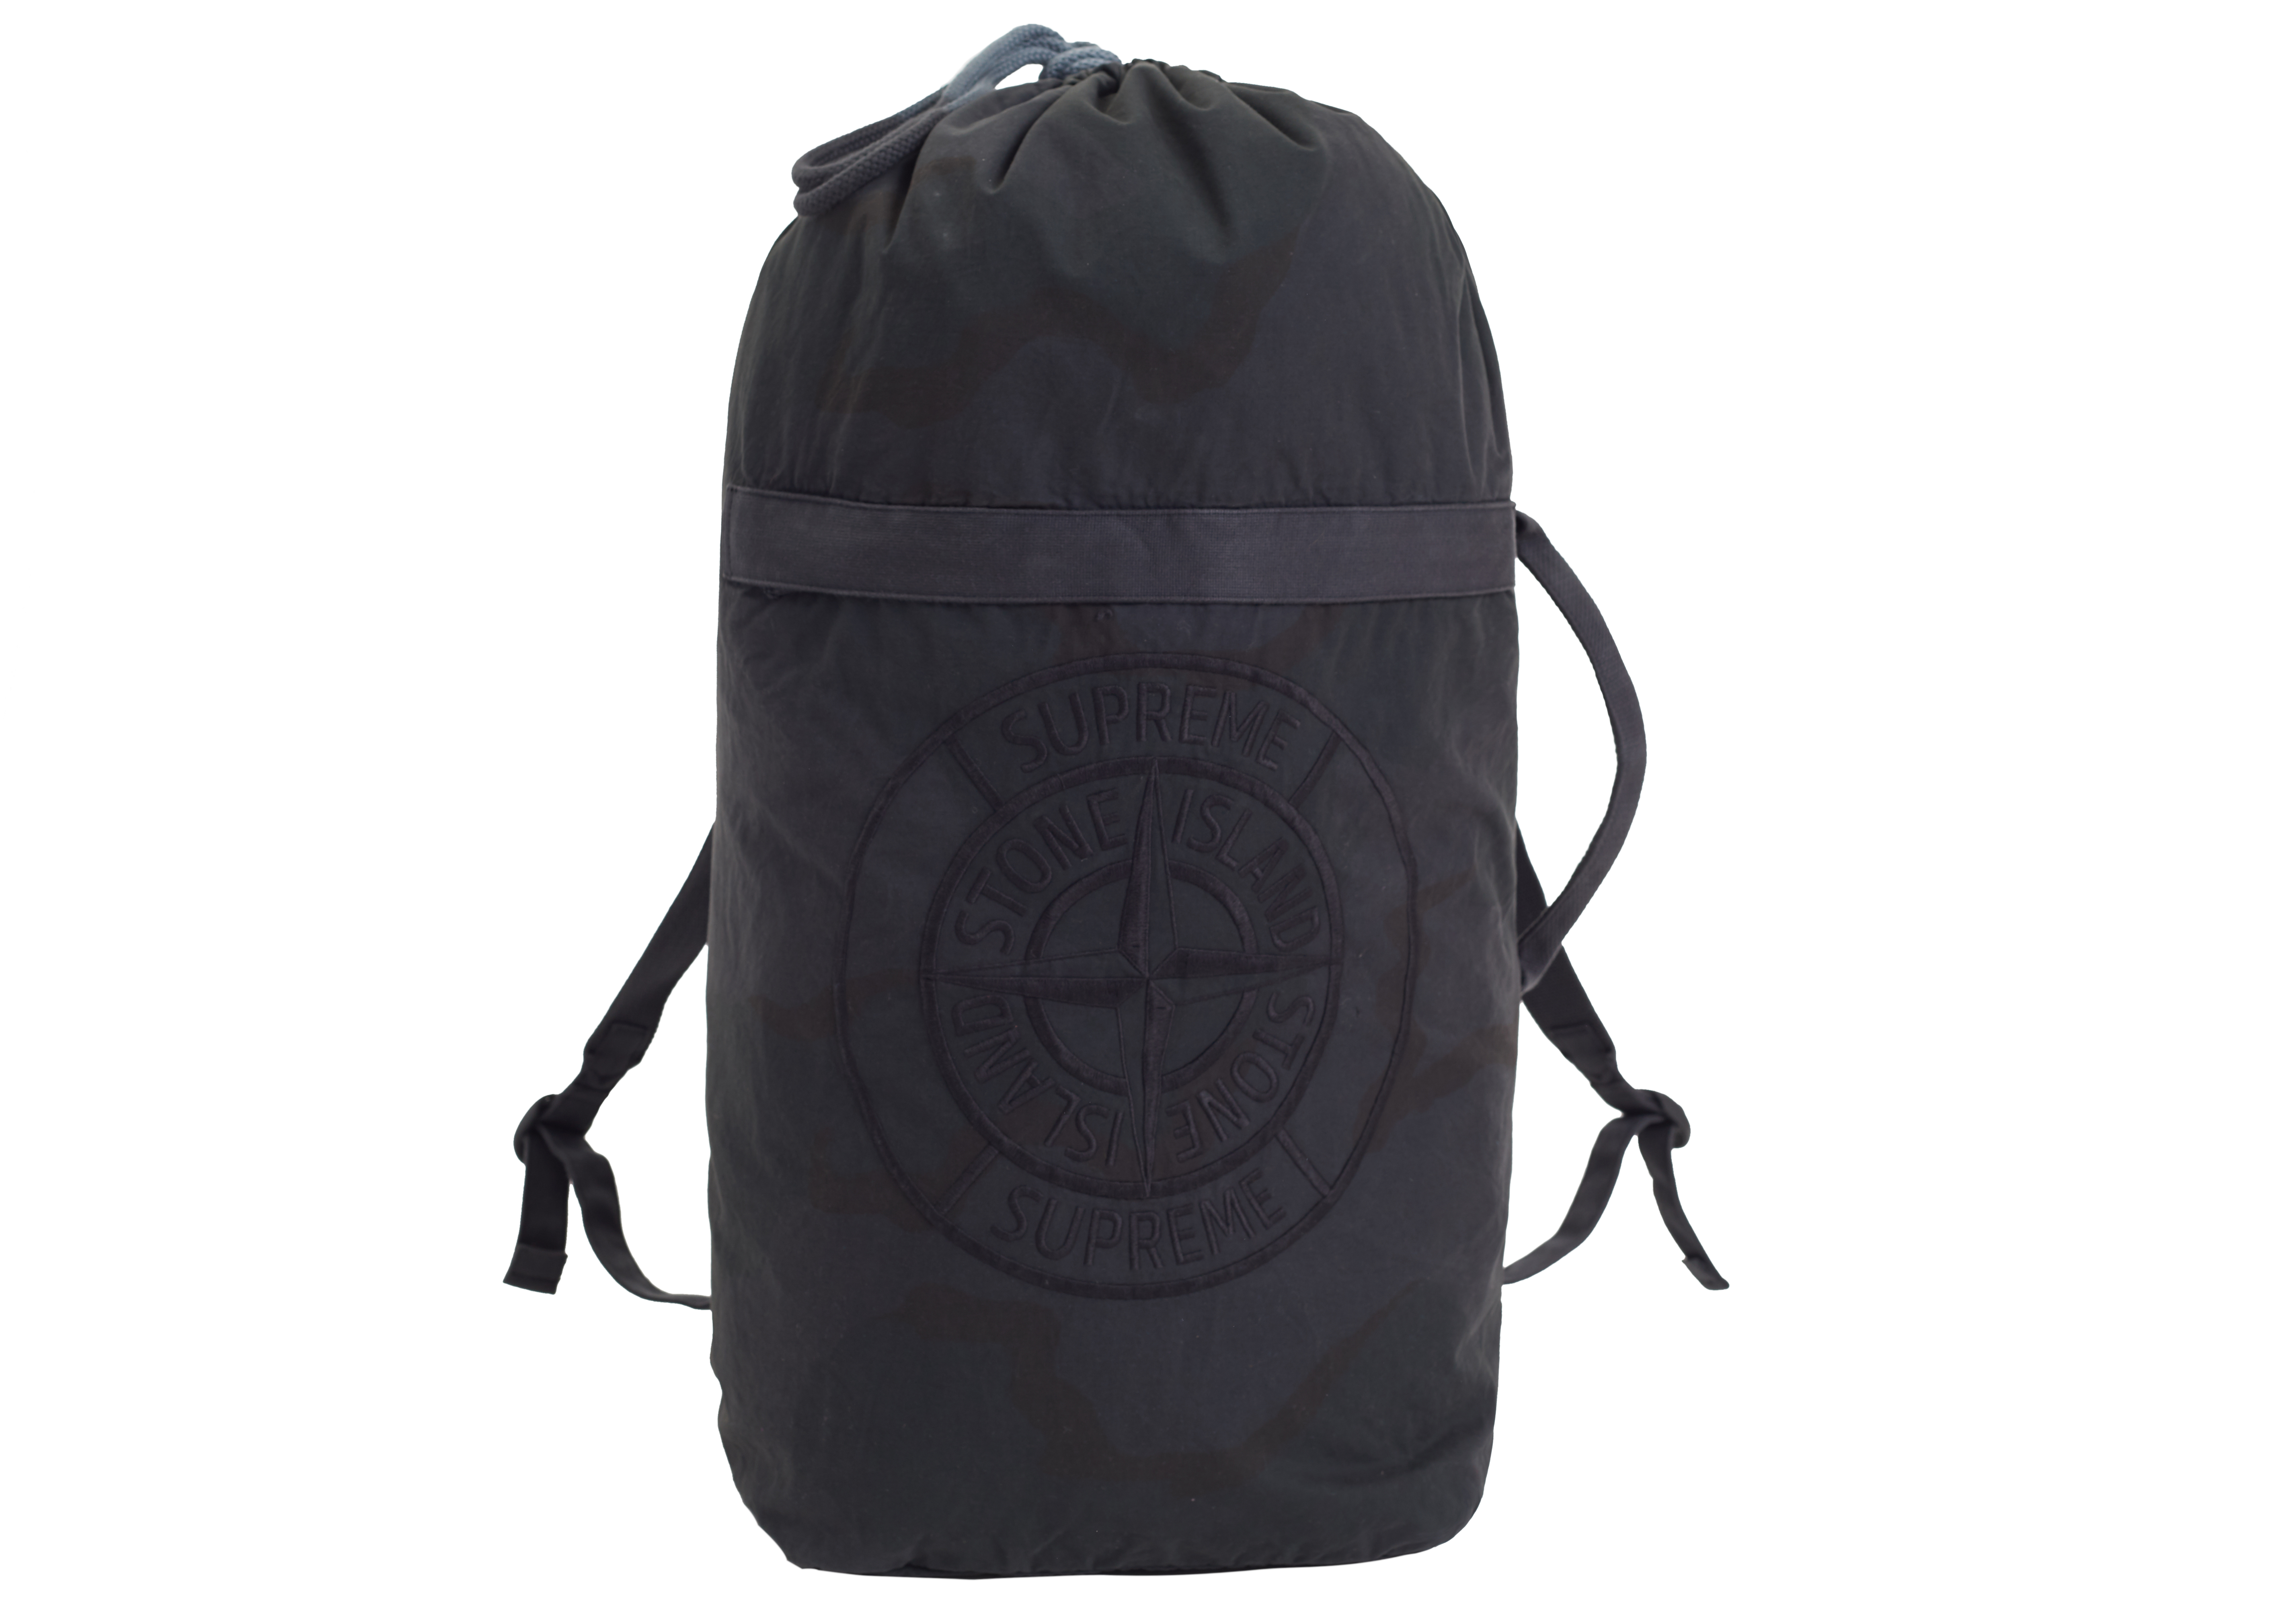 Supreme Stone Island Camo Backpack 黒